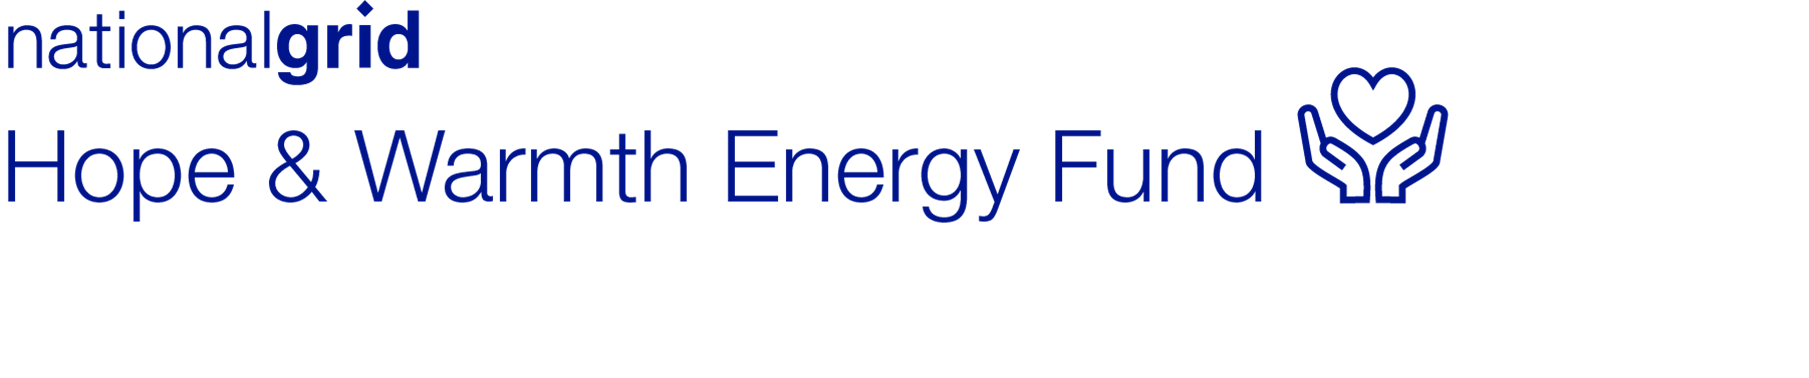 Hope & Warmth Energy Fund logo